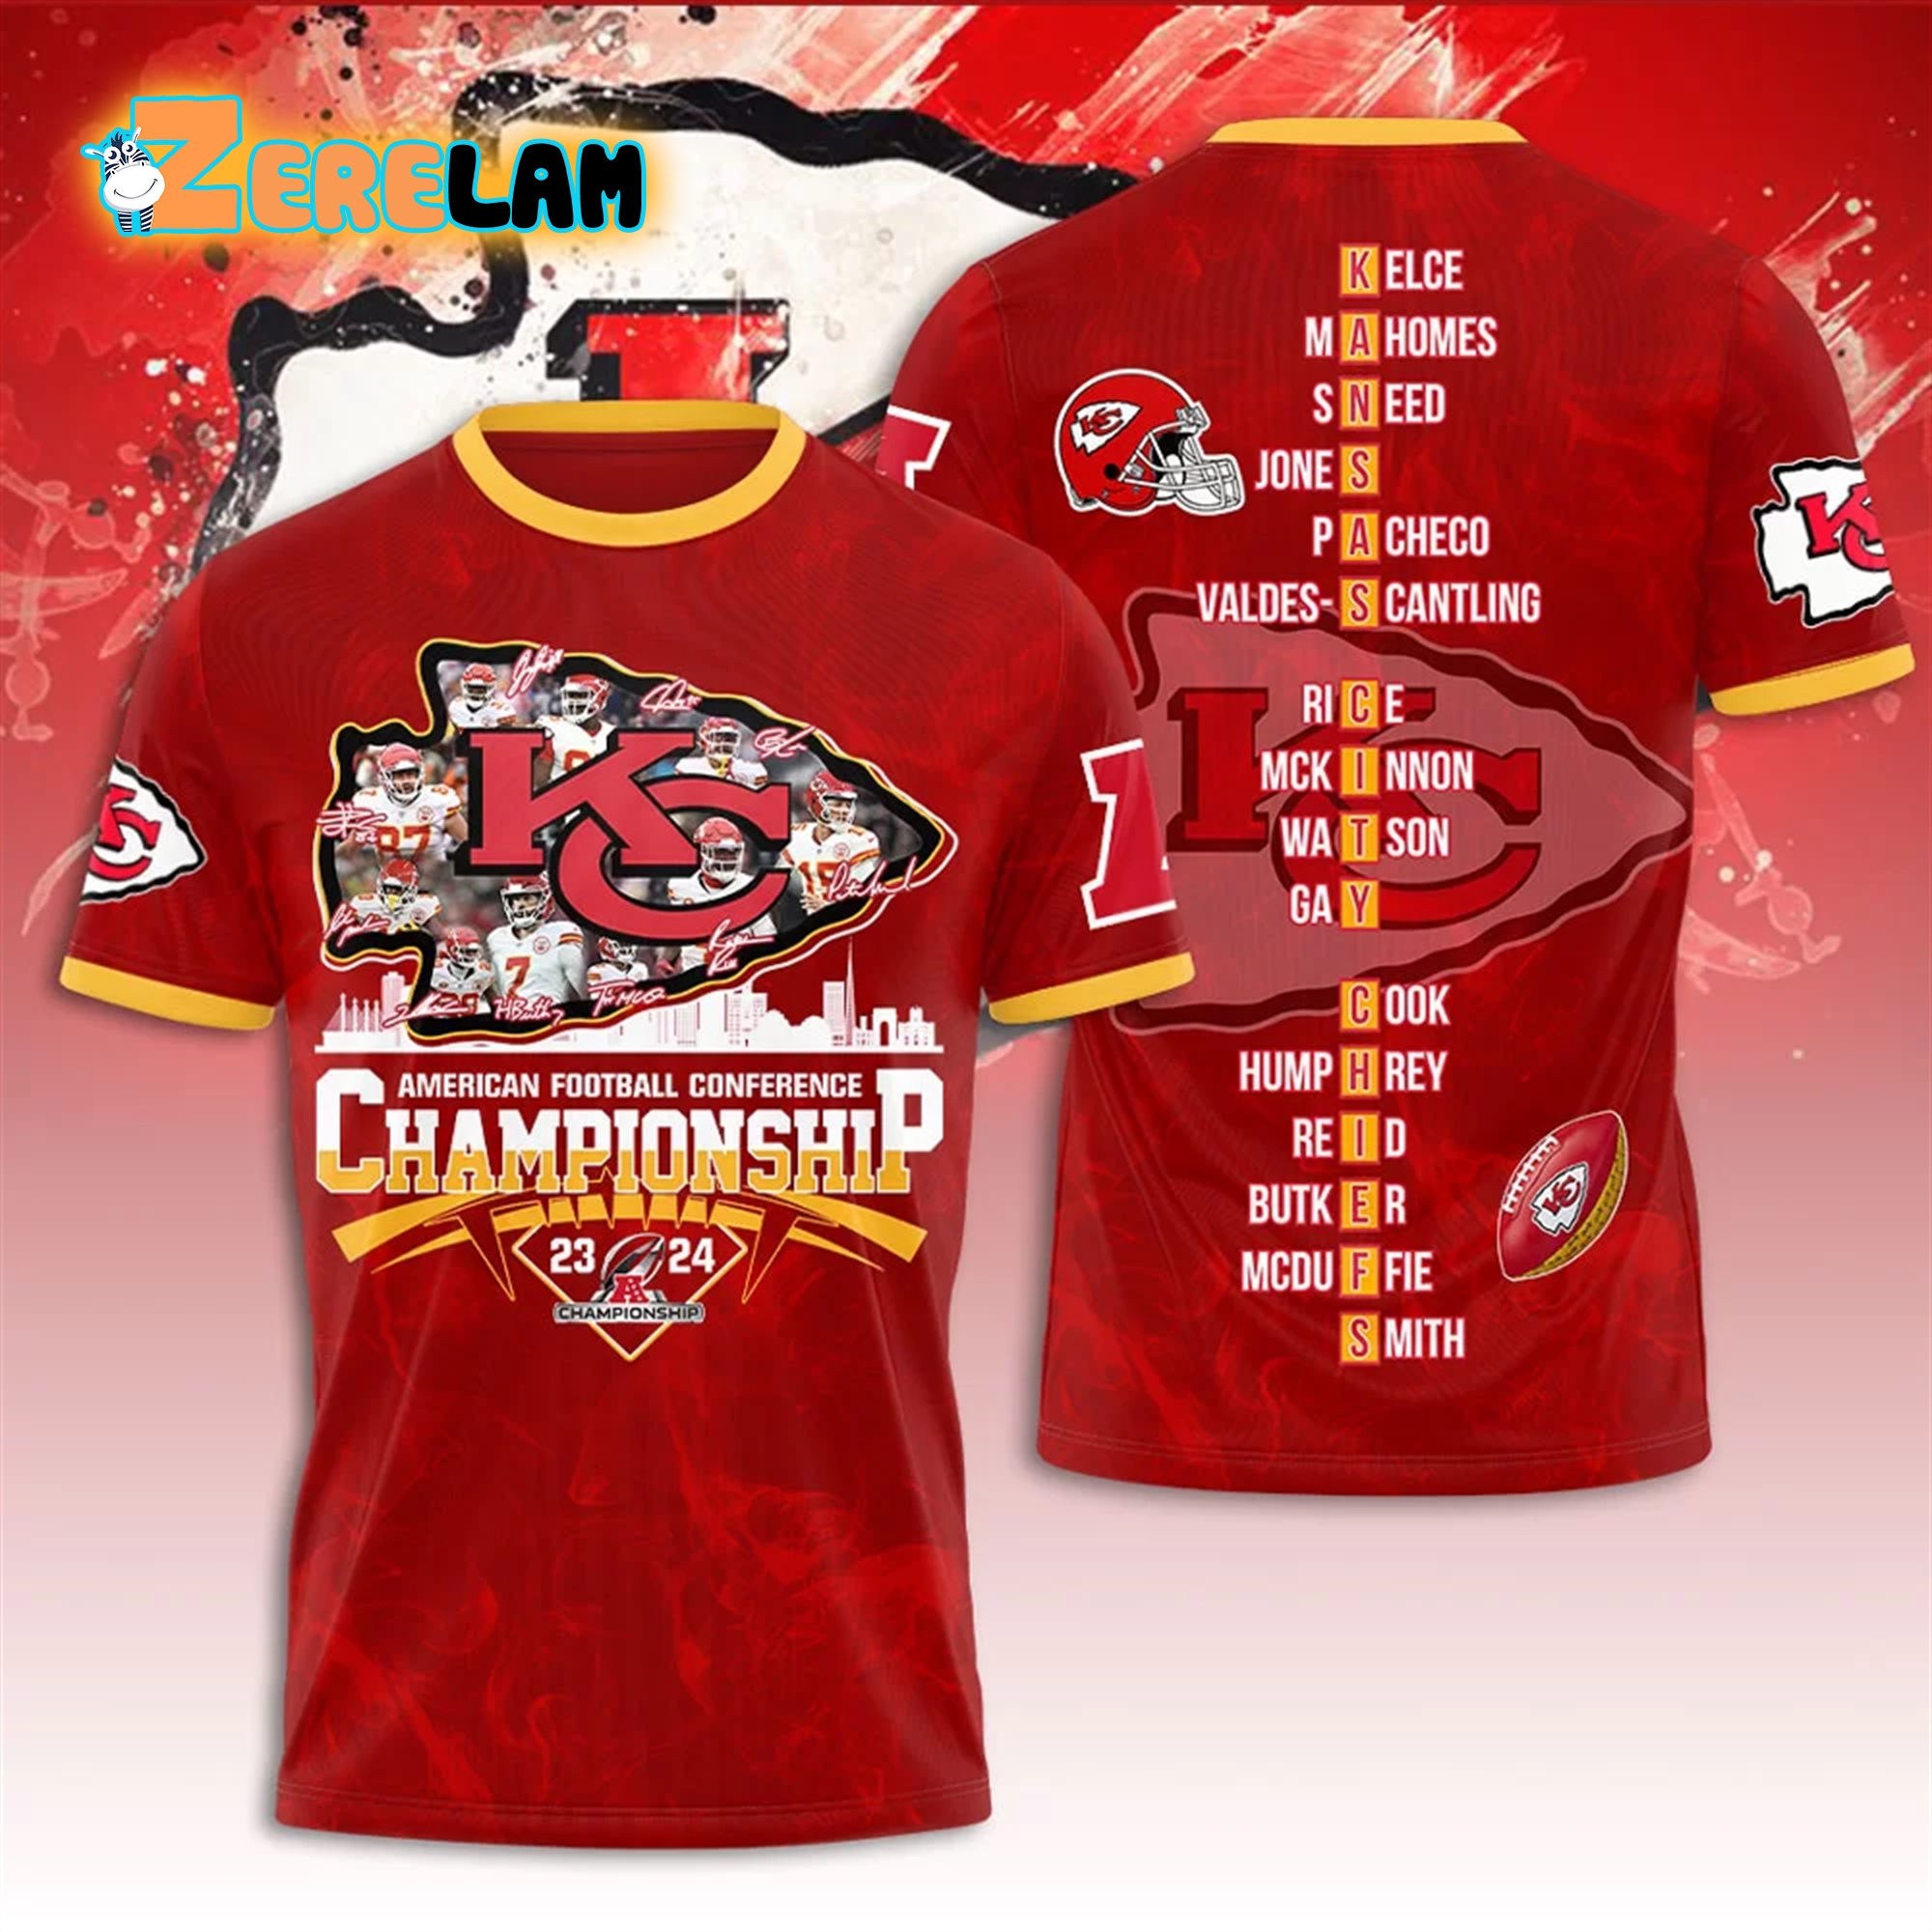 KC American Football Conference Championship 20232024 Shirt Zerelam